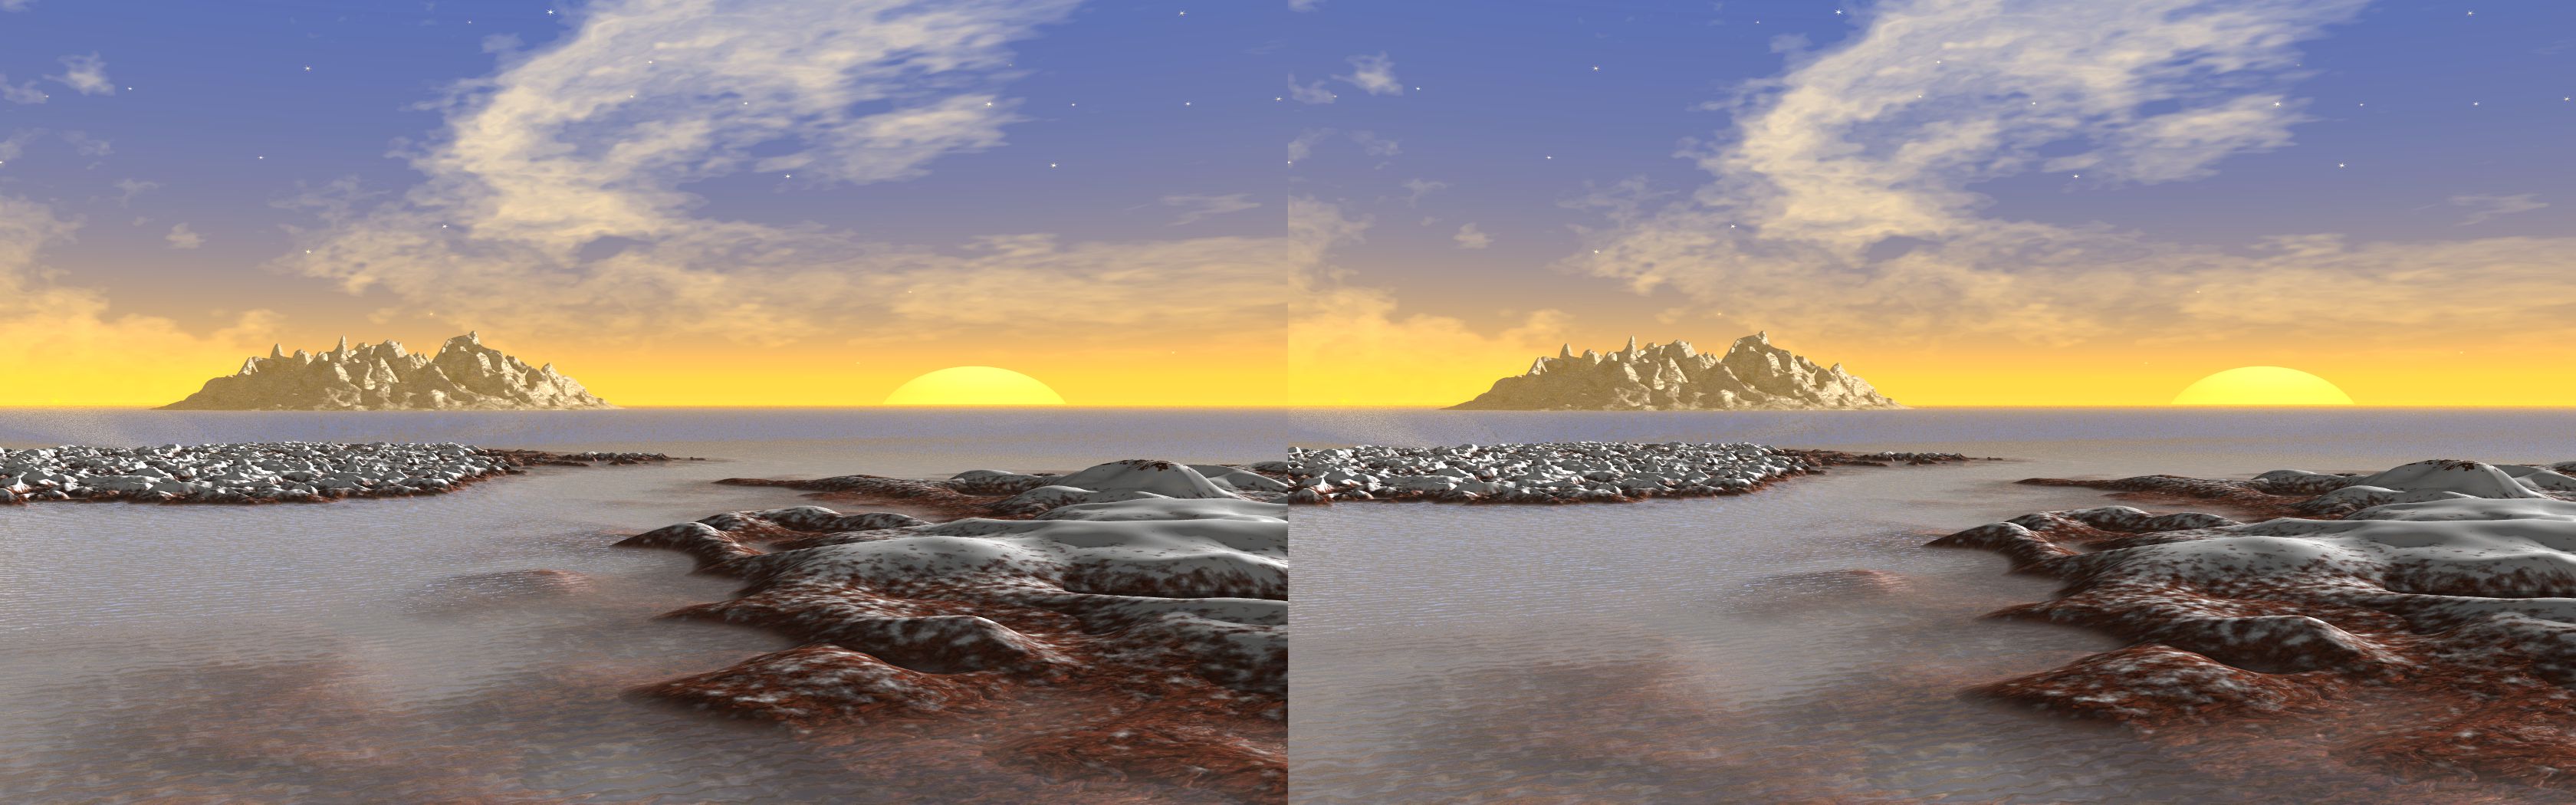 Ice Coast Sunset - 3D stereo JPS image